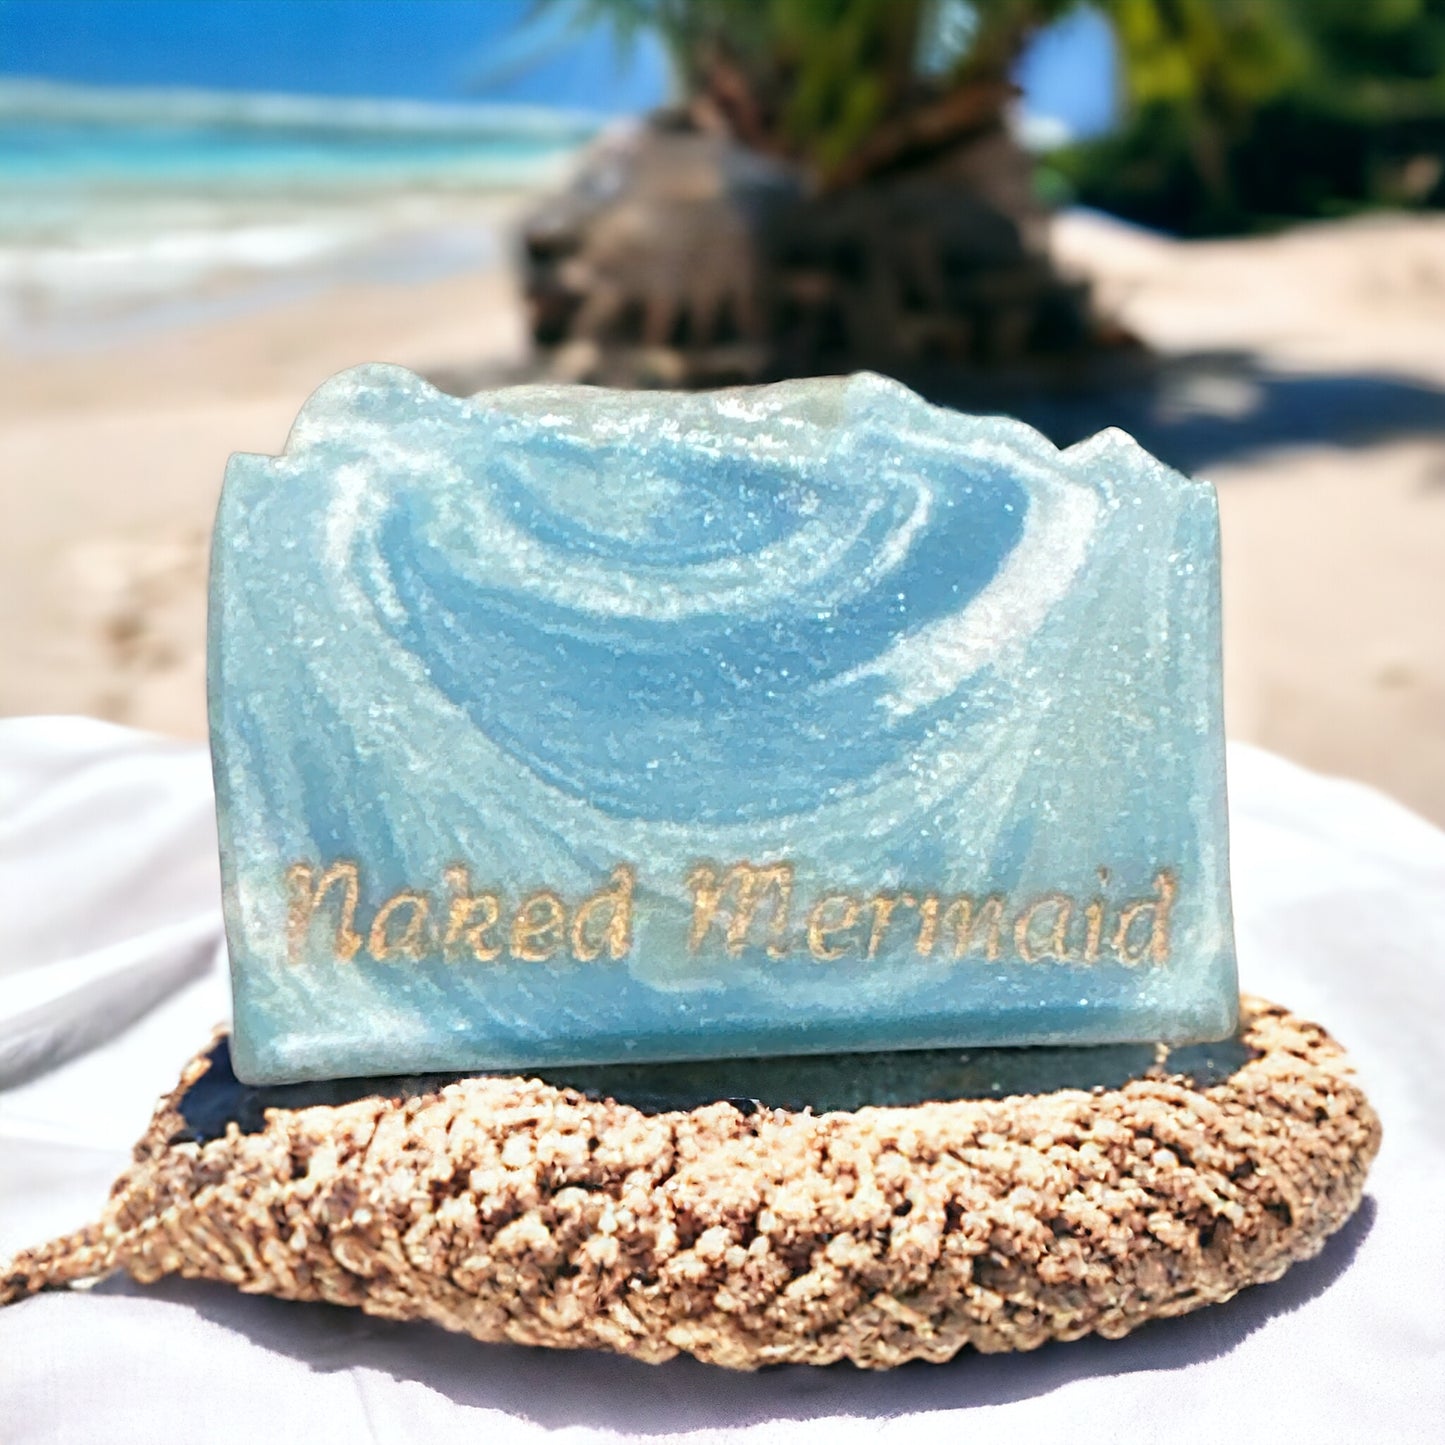 Naked Mermaid Soapery Ocean Breeze Soap Bar